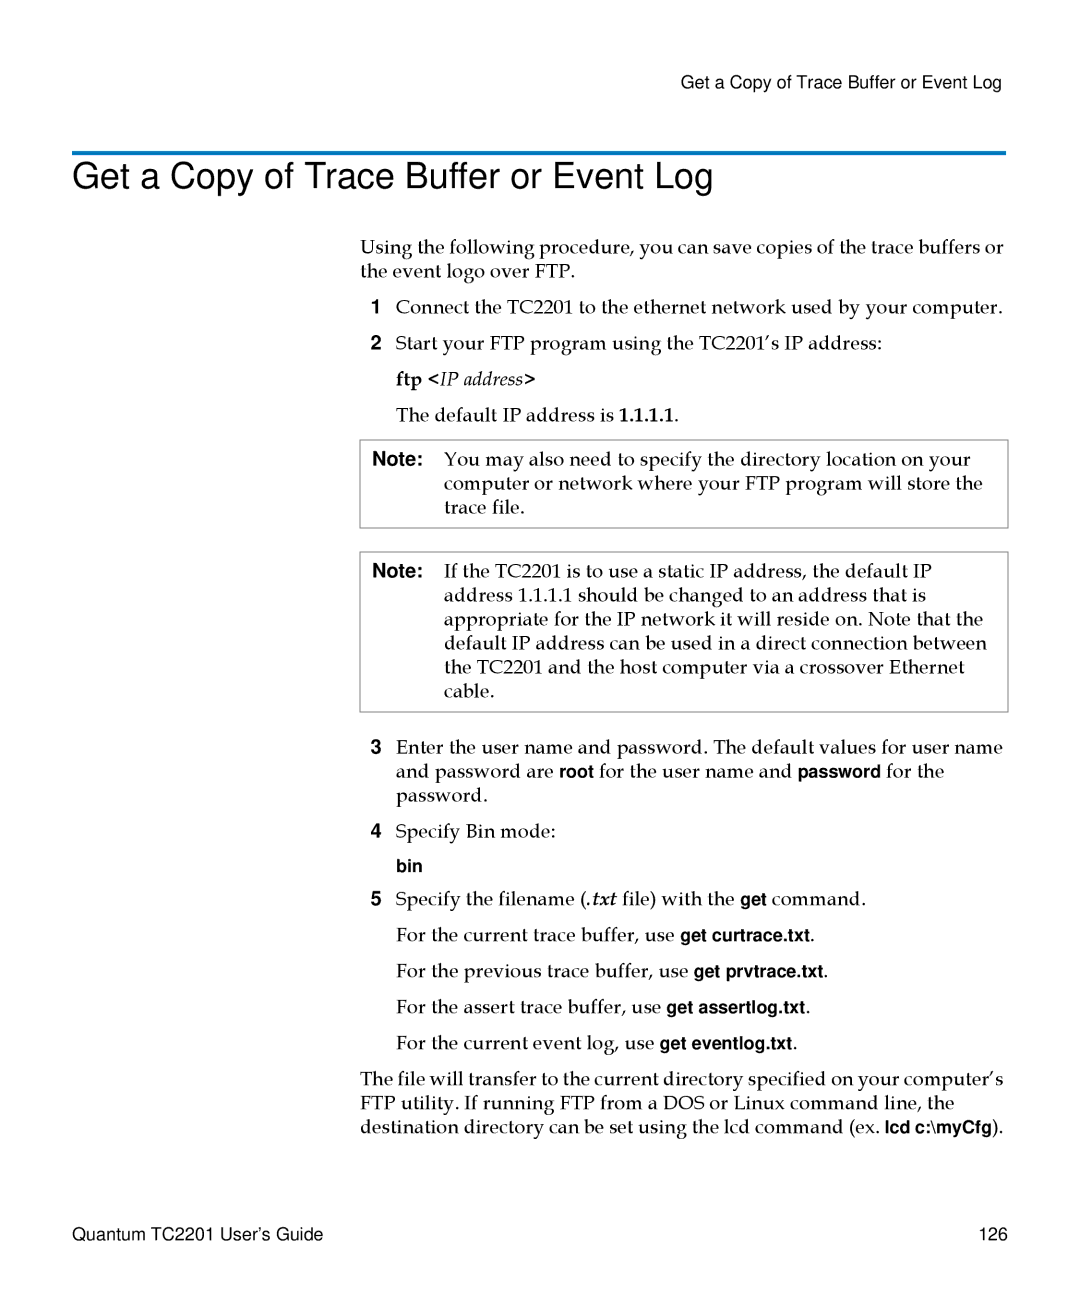 Quantum TC2201 manual Get a Copy of Trace Buffer or Event Log 